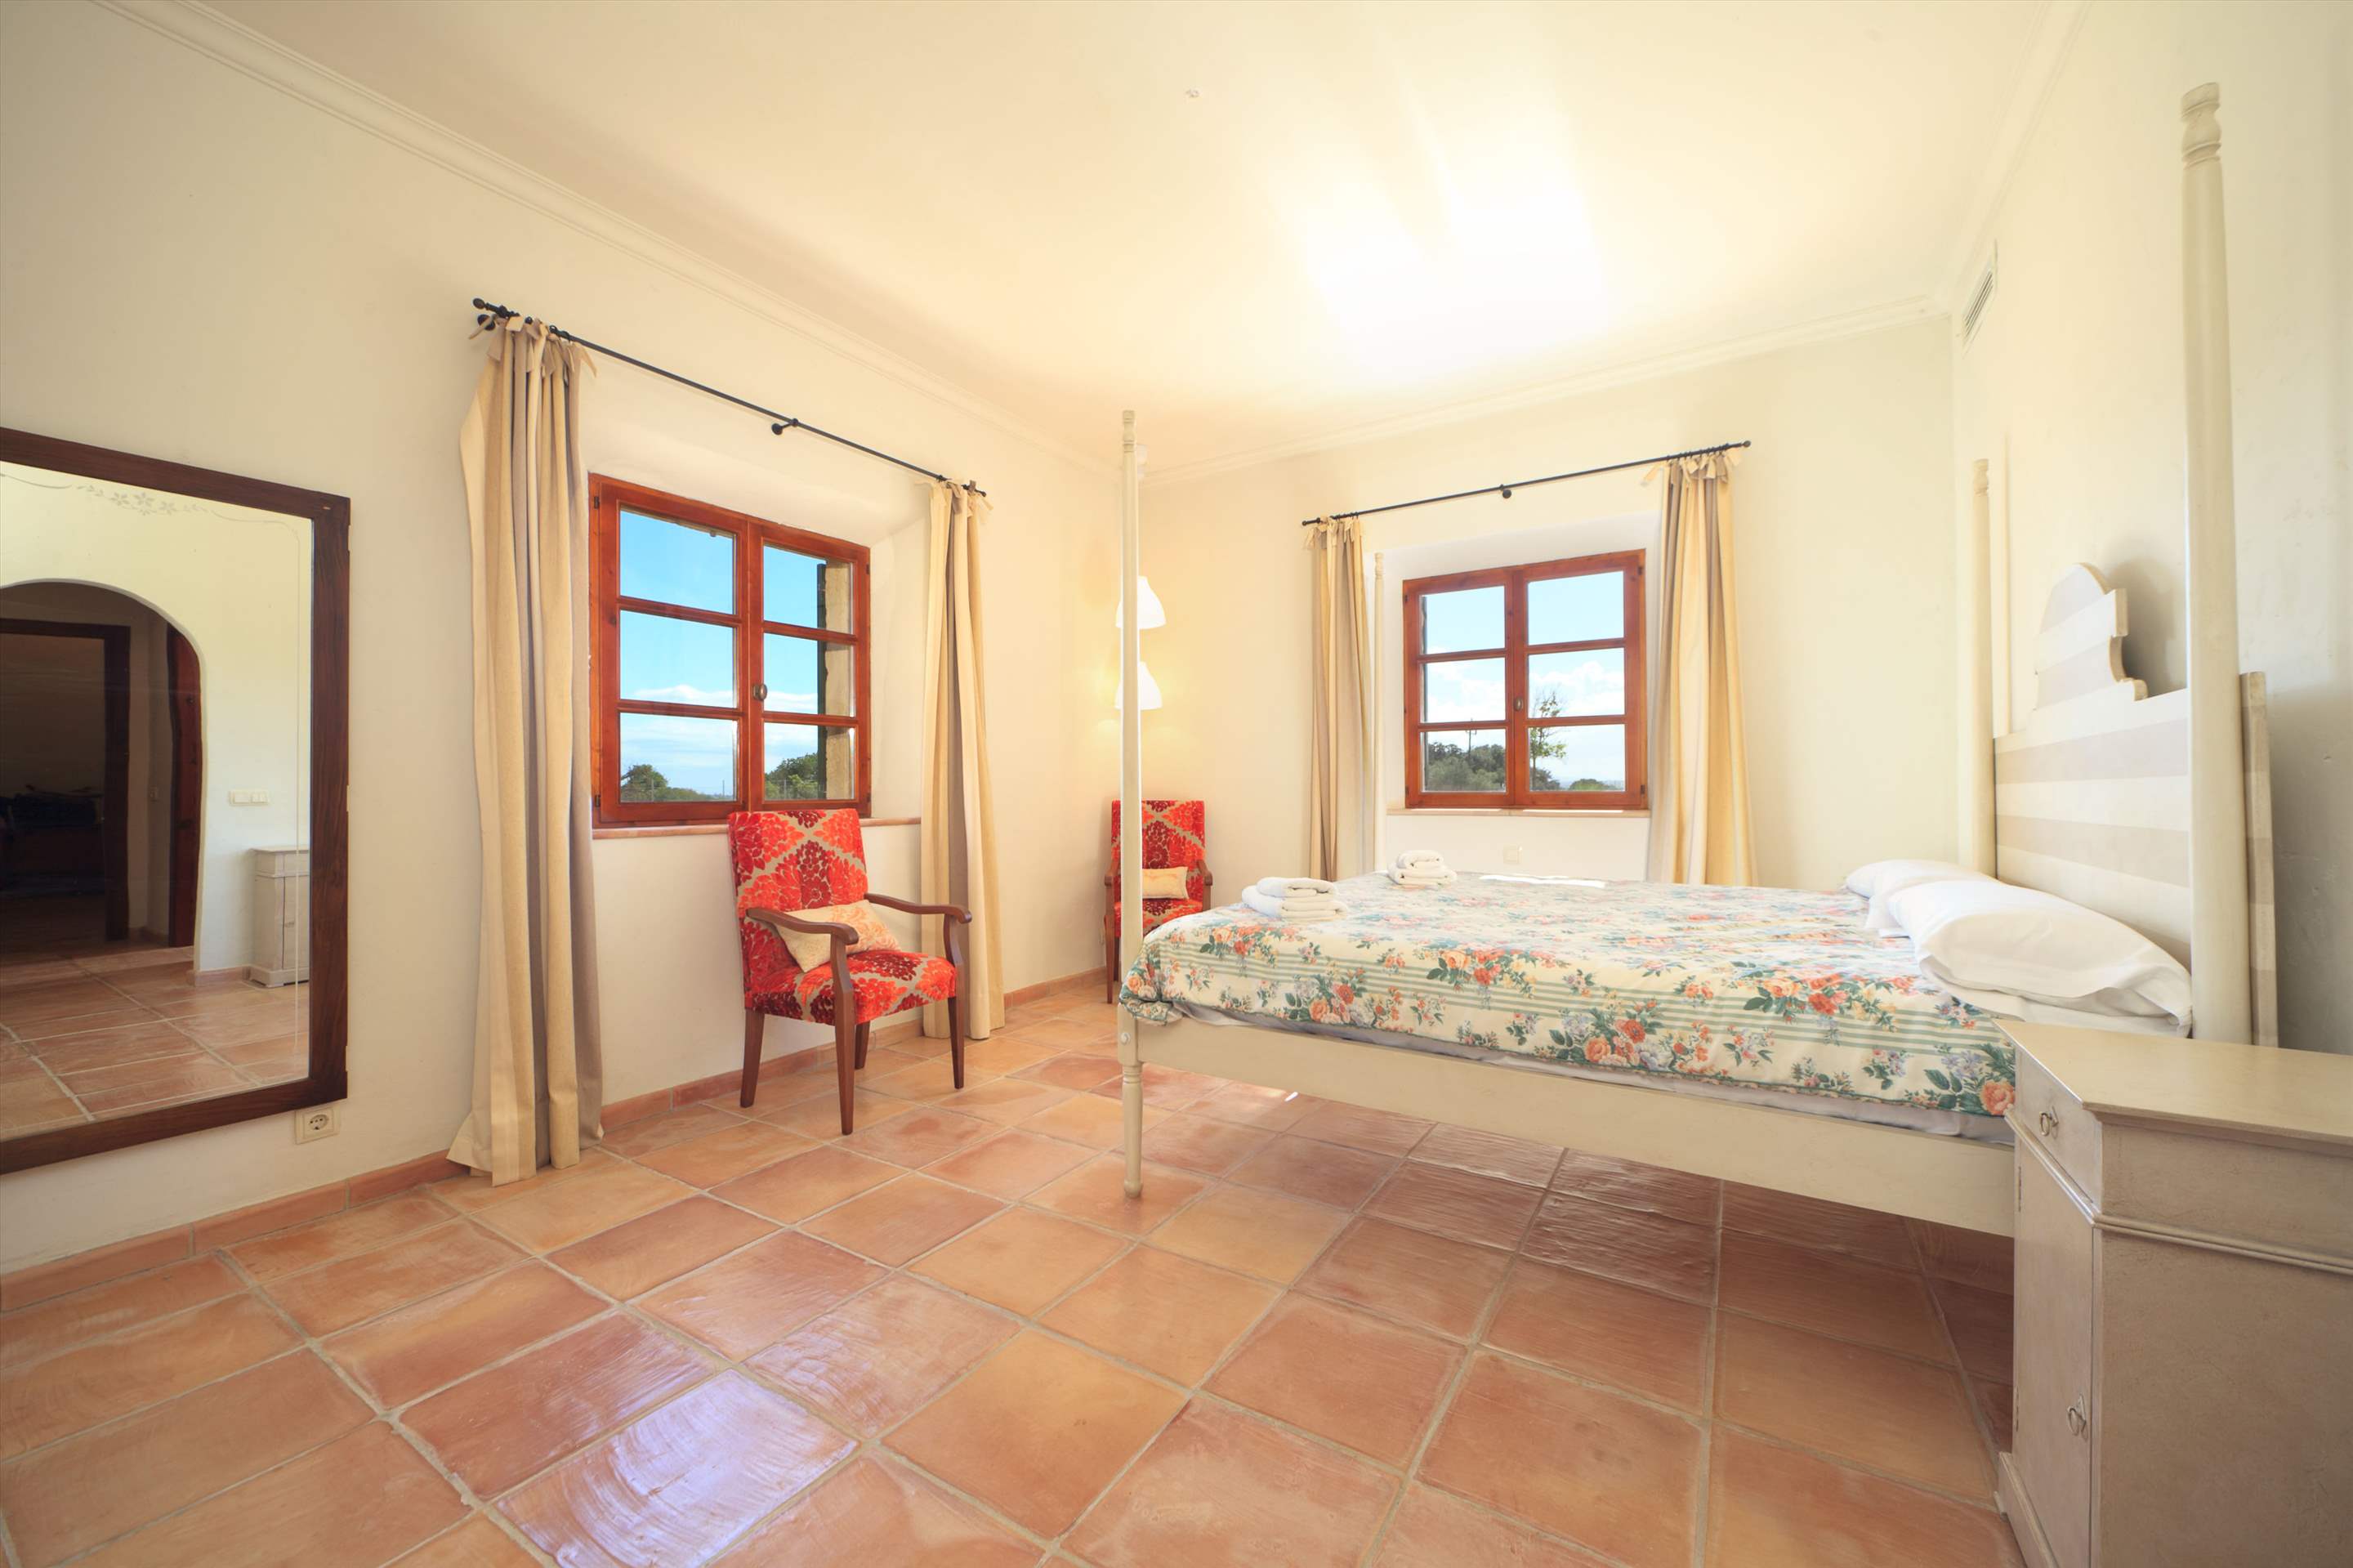 Son Ferragut de Baix , 4 bedroom villa in Sa Pobla, Buger, Inca , Majorca Photo #15